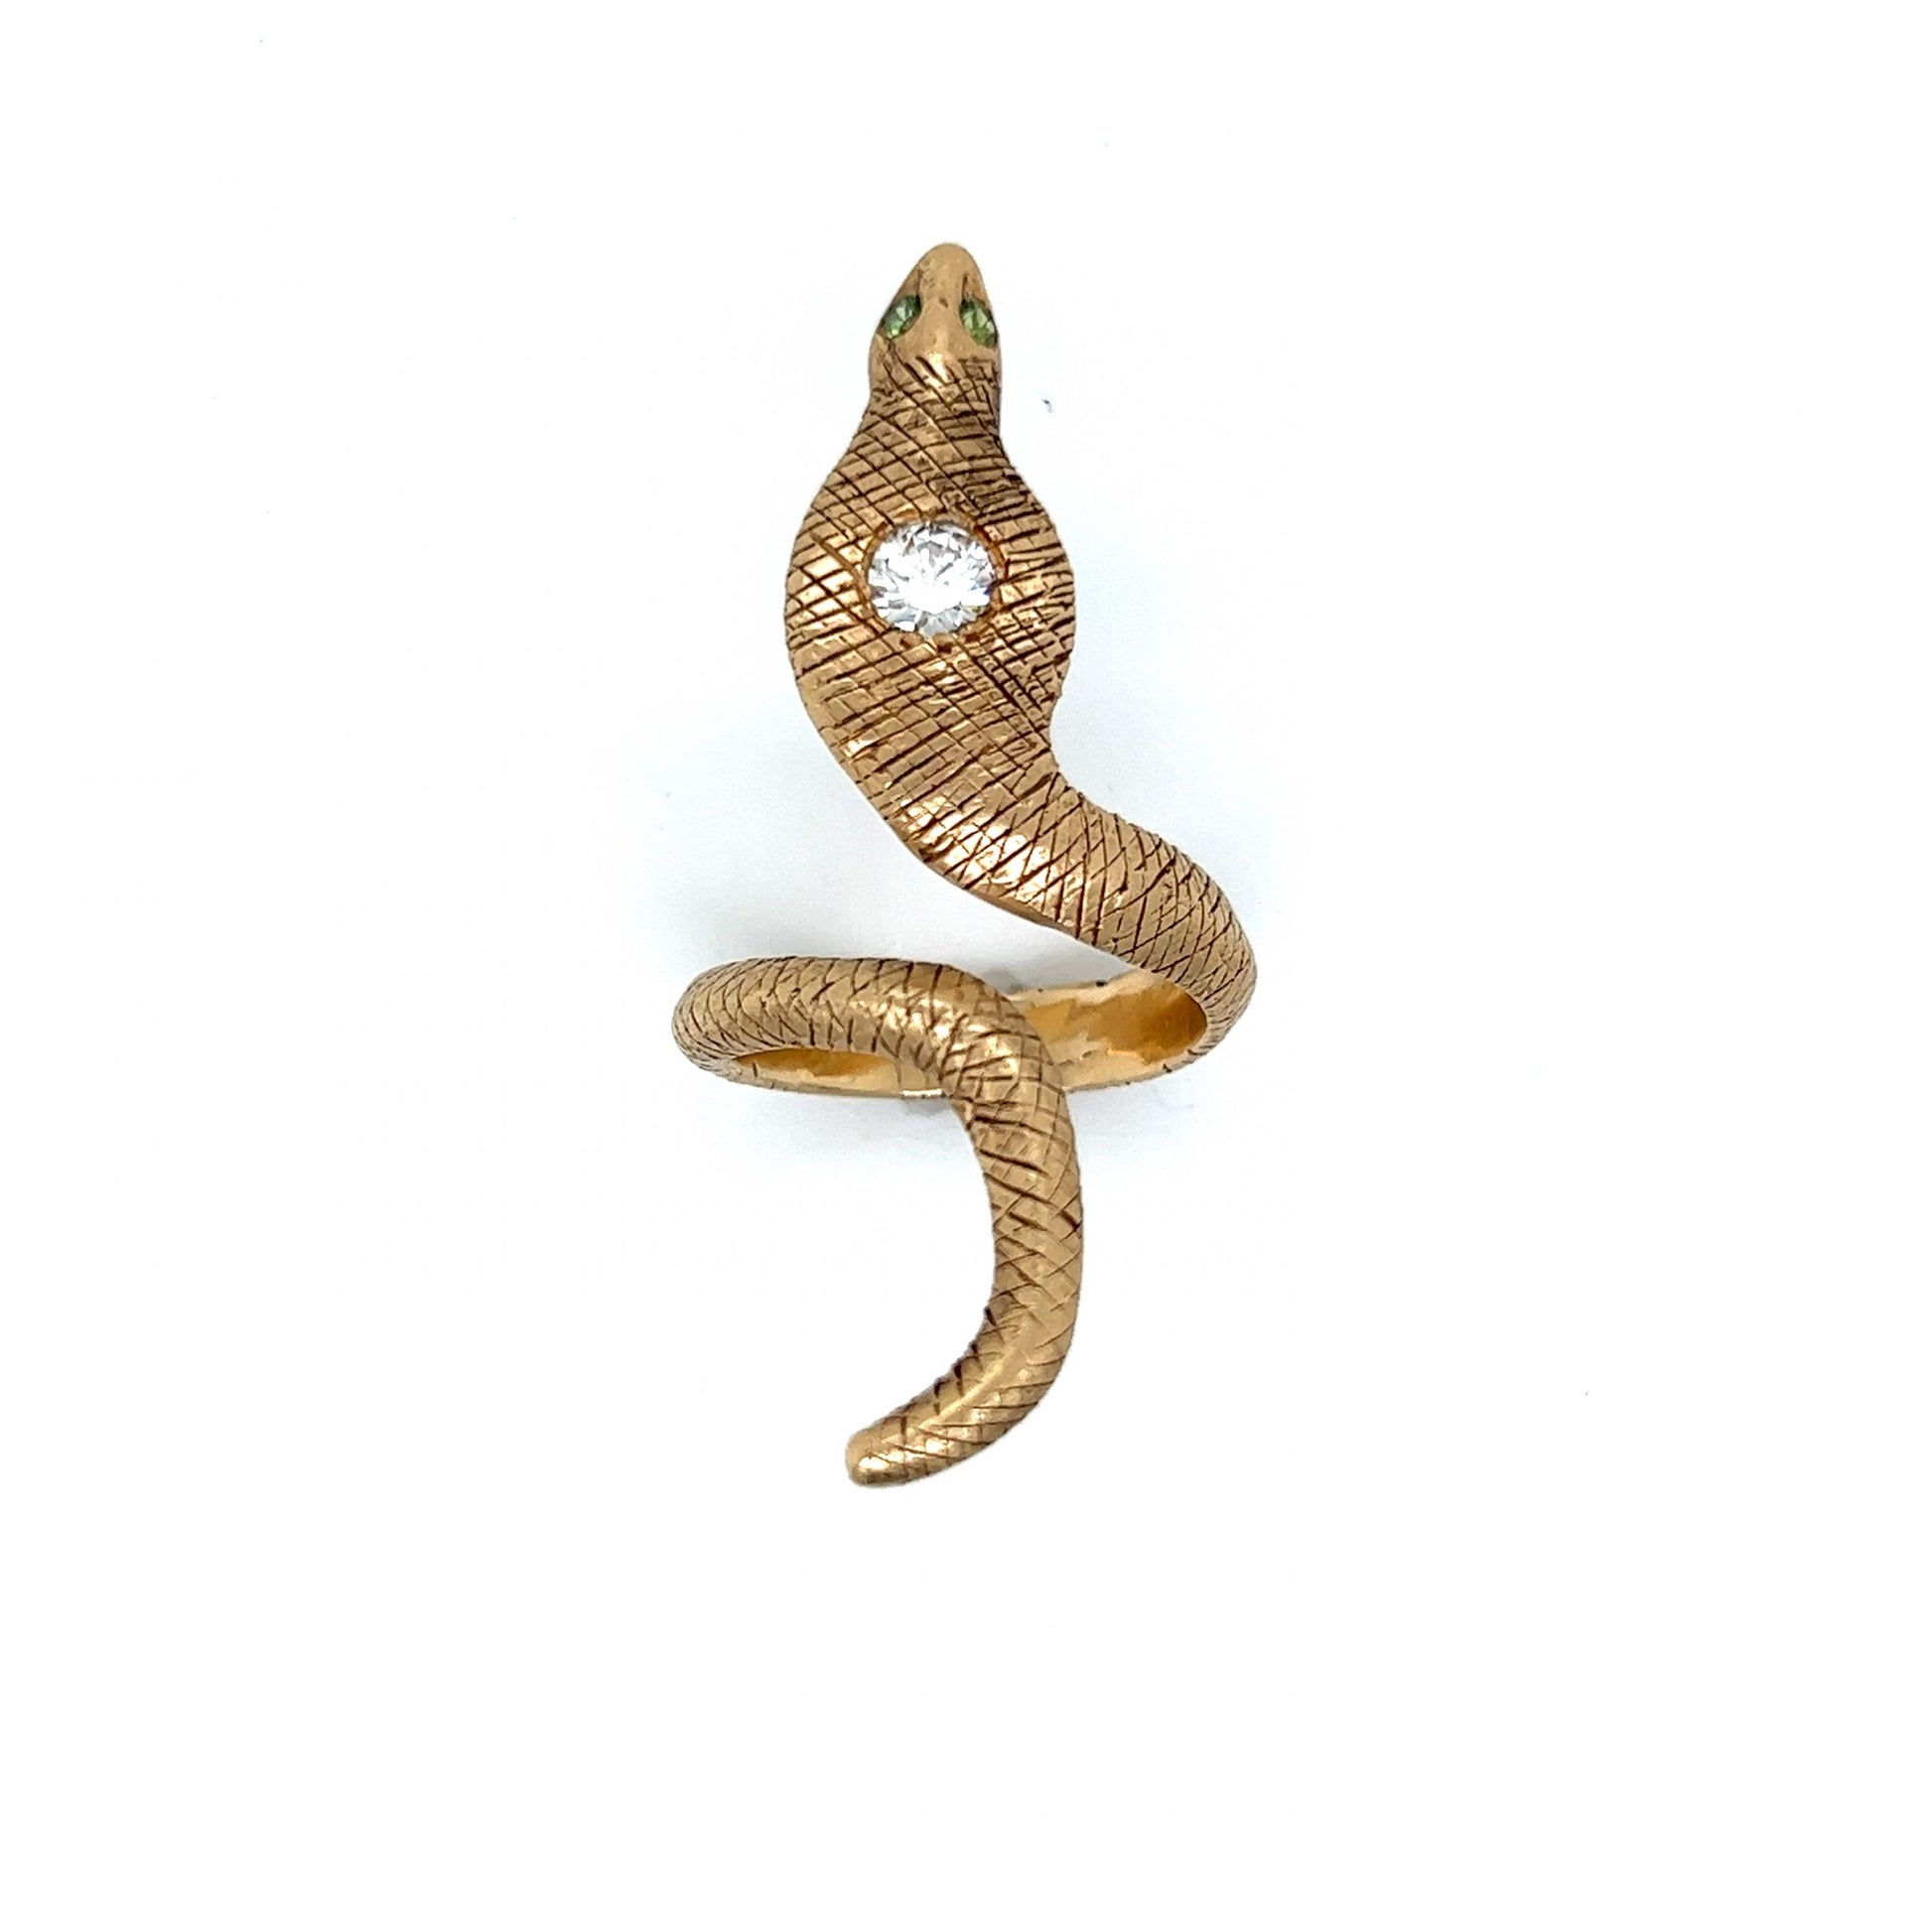 Dean Diamond Cobra Snake Ring in 14k Yellow GoldComposition: 14 Karat Yellow Gold Ring Size: 9.5 Total Diamond Weight: .46ct Total Gram Weight: 15.5 g Inscription: Dean 2006 14k 
      